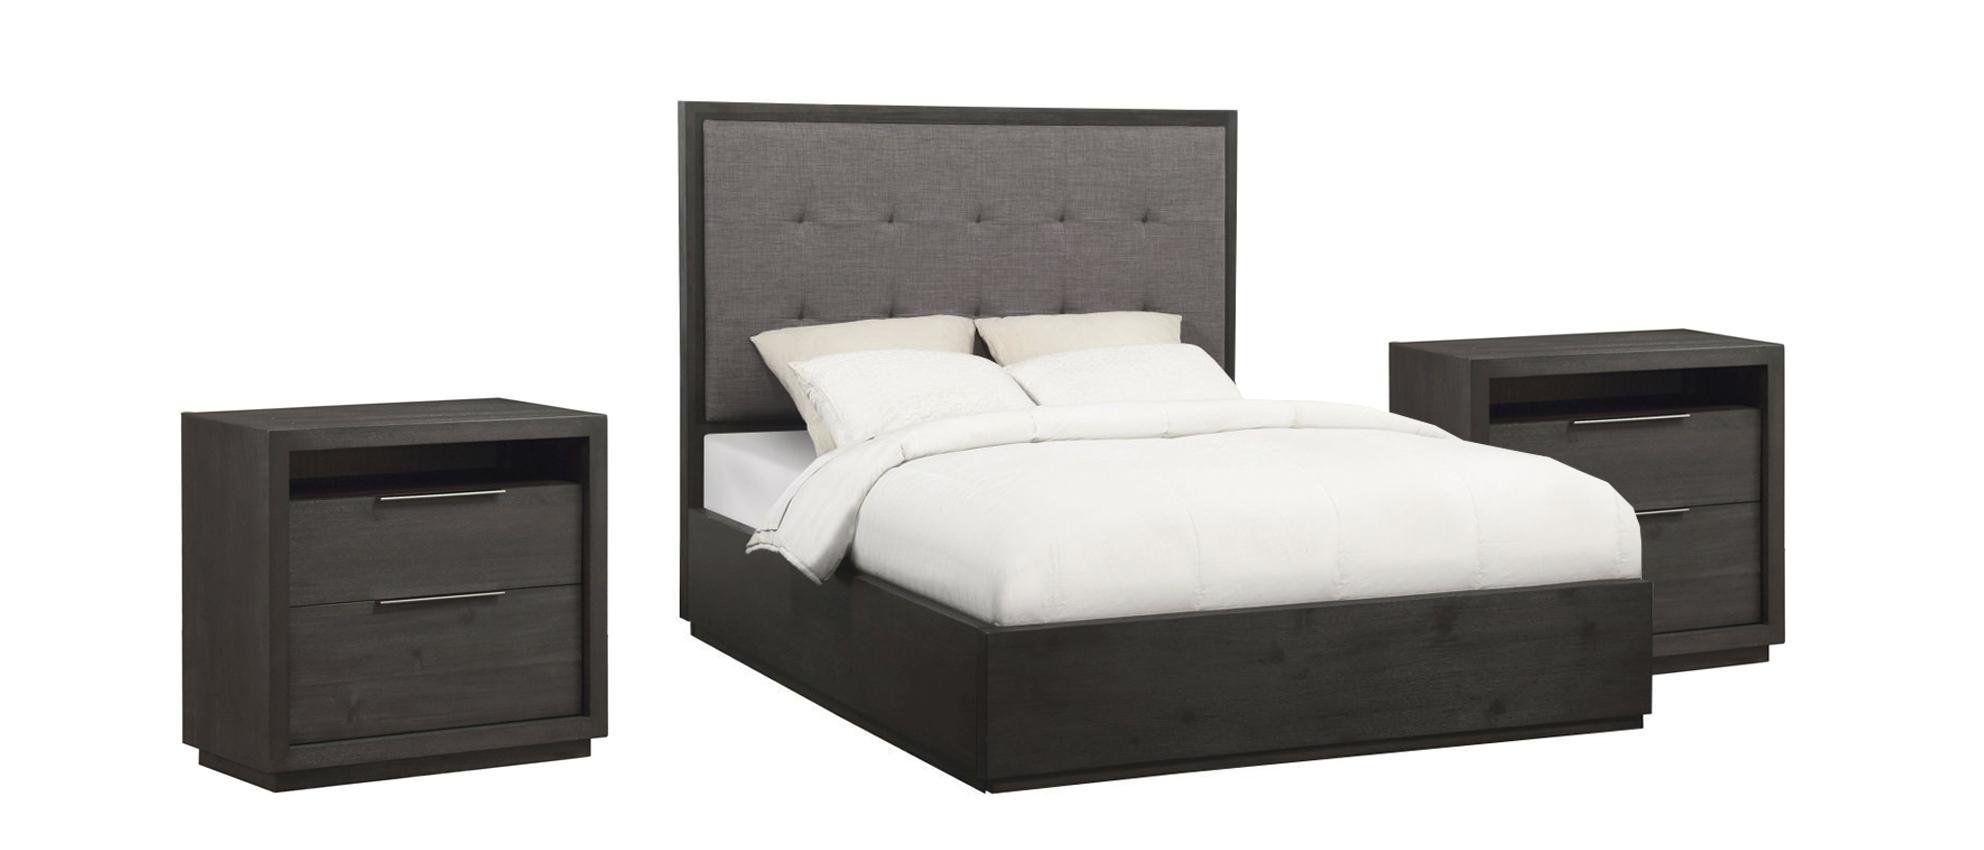 Contemporary Storage Bedroom Set OXFORD STORAGE AZU5S5D-2N-3PC in Dark Gray Fabric